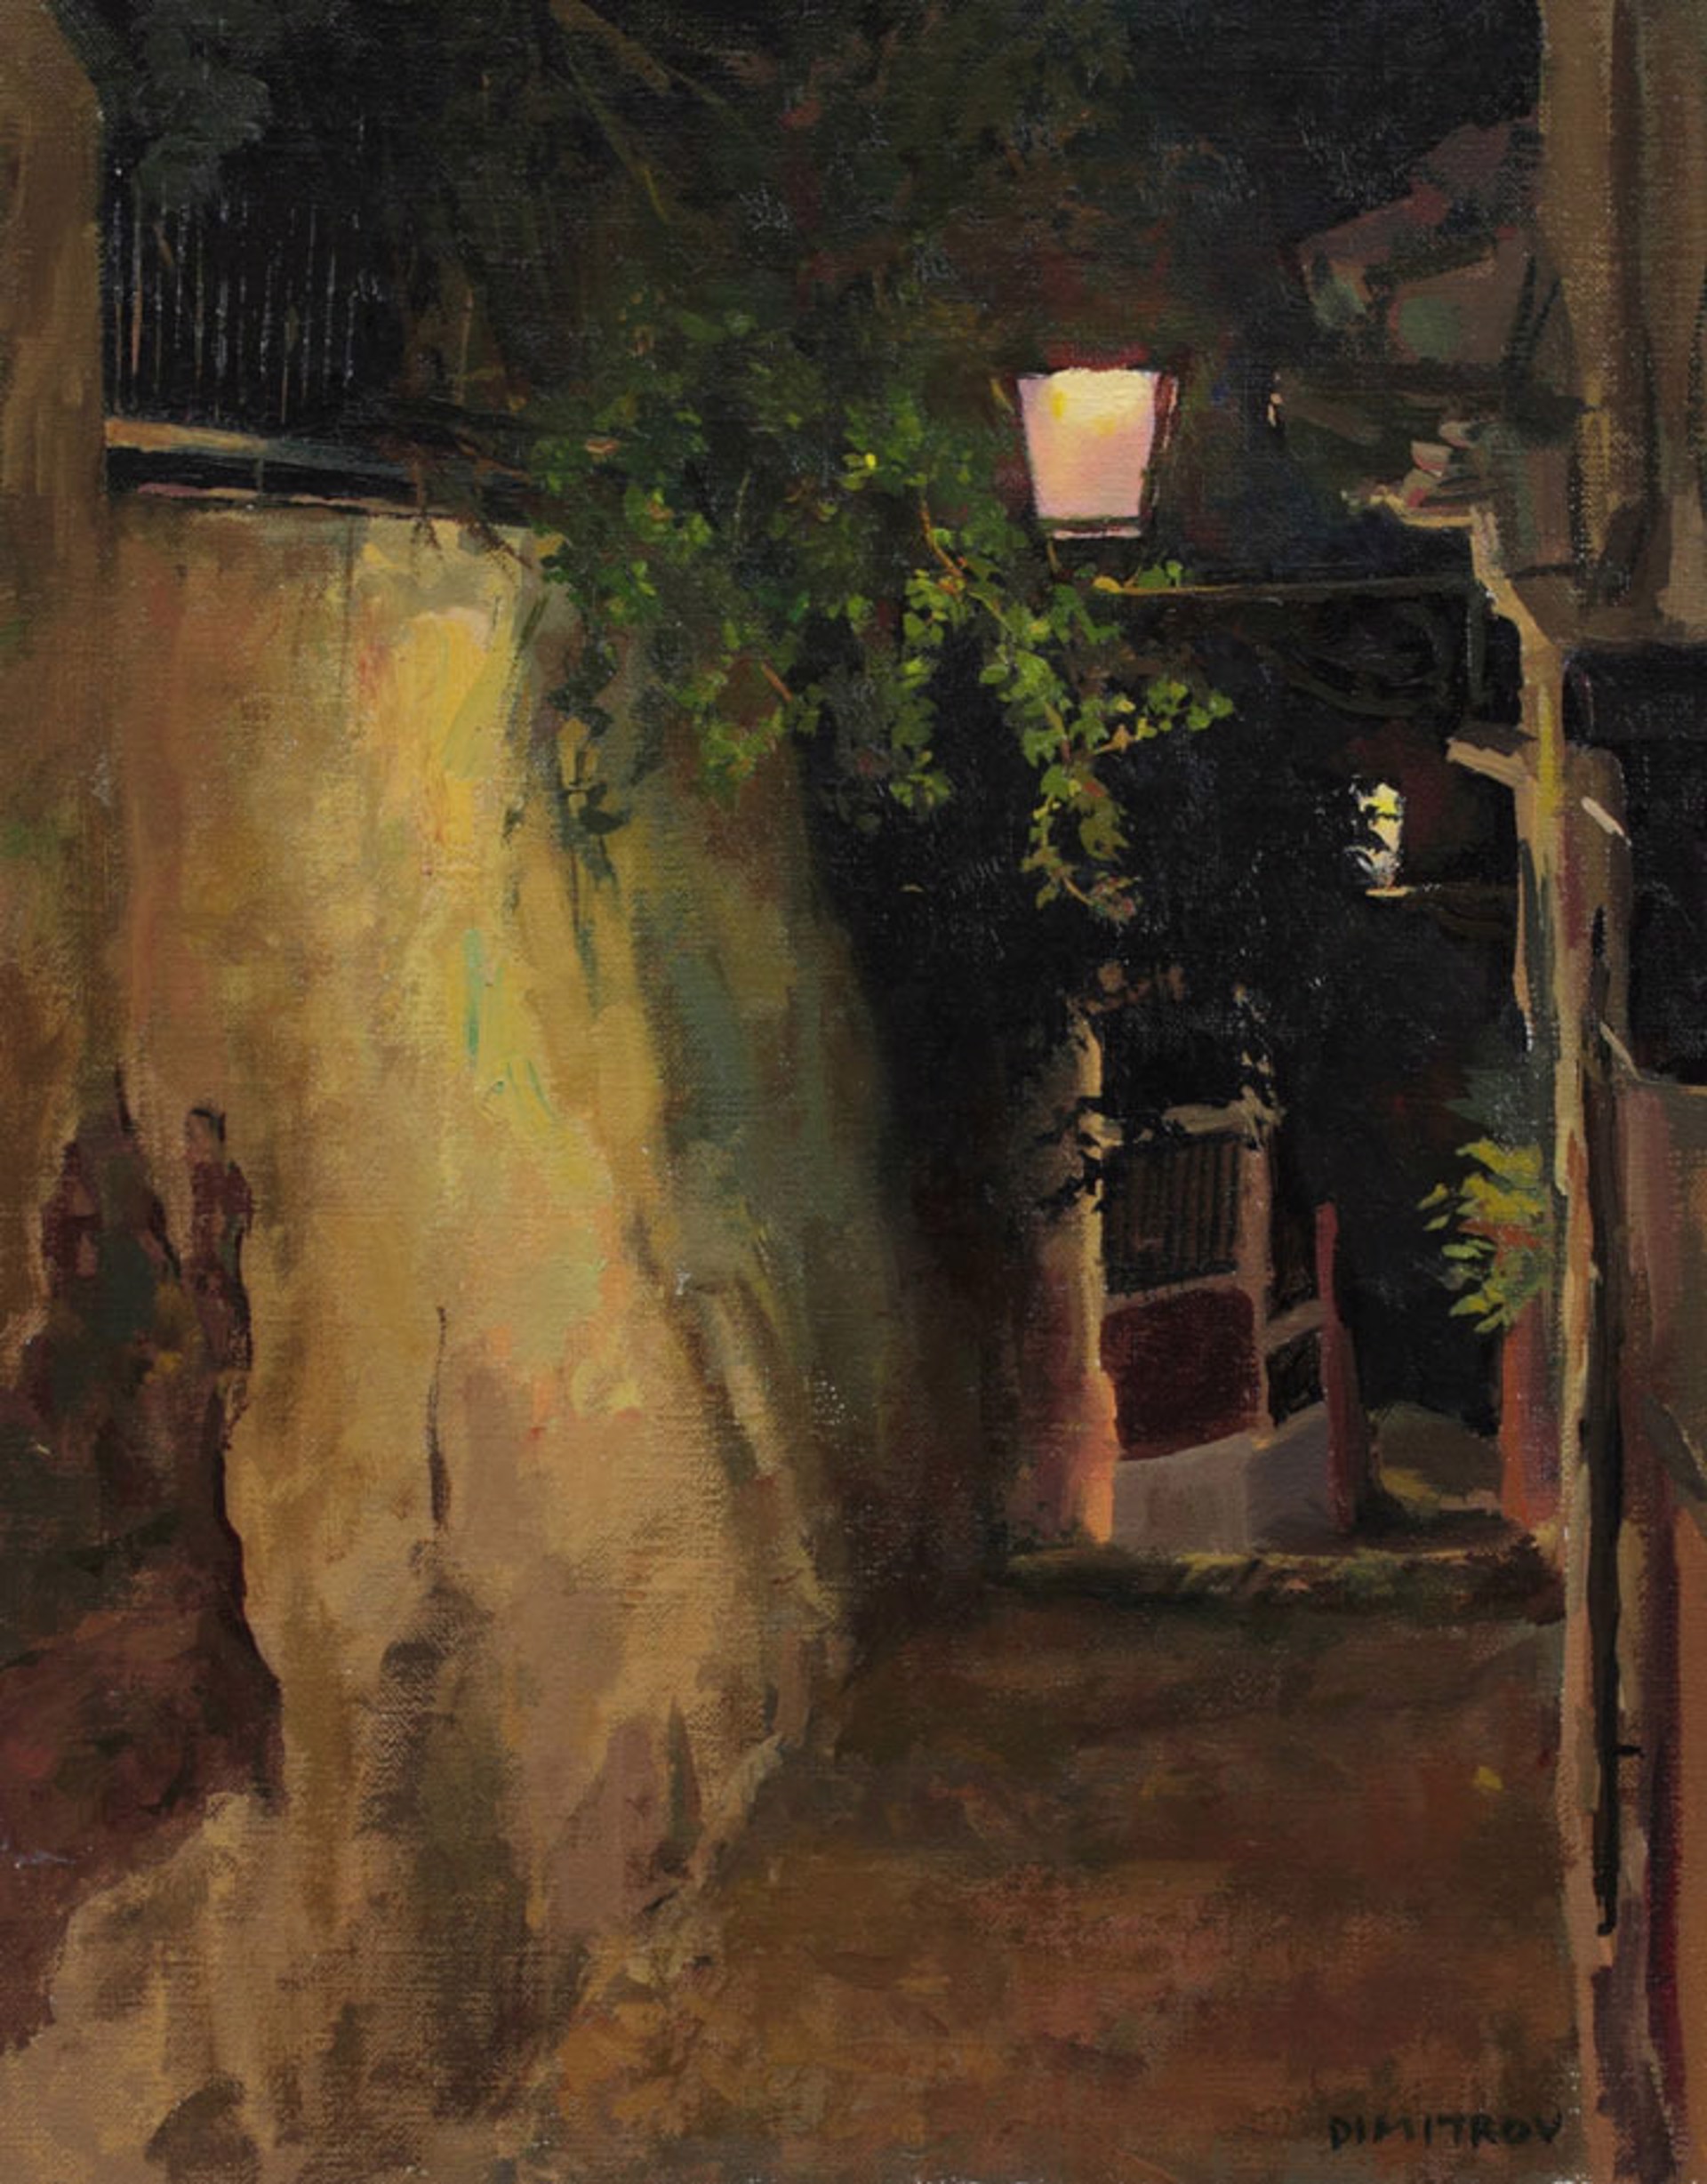 Alley in Granada by Martin Dimitrov